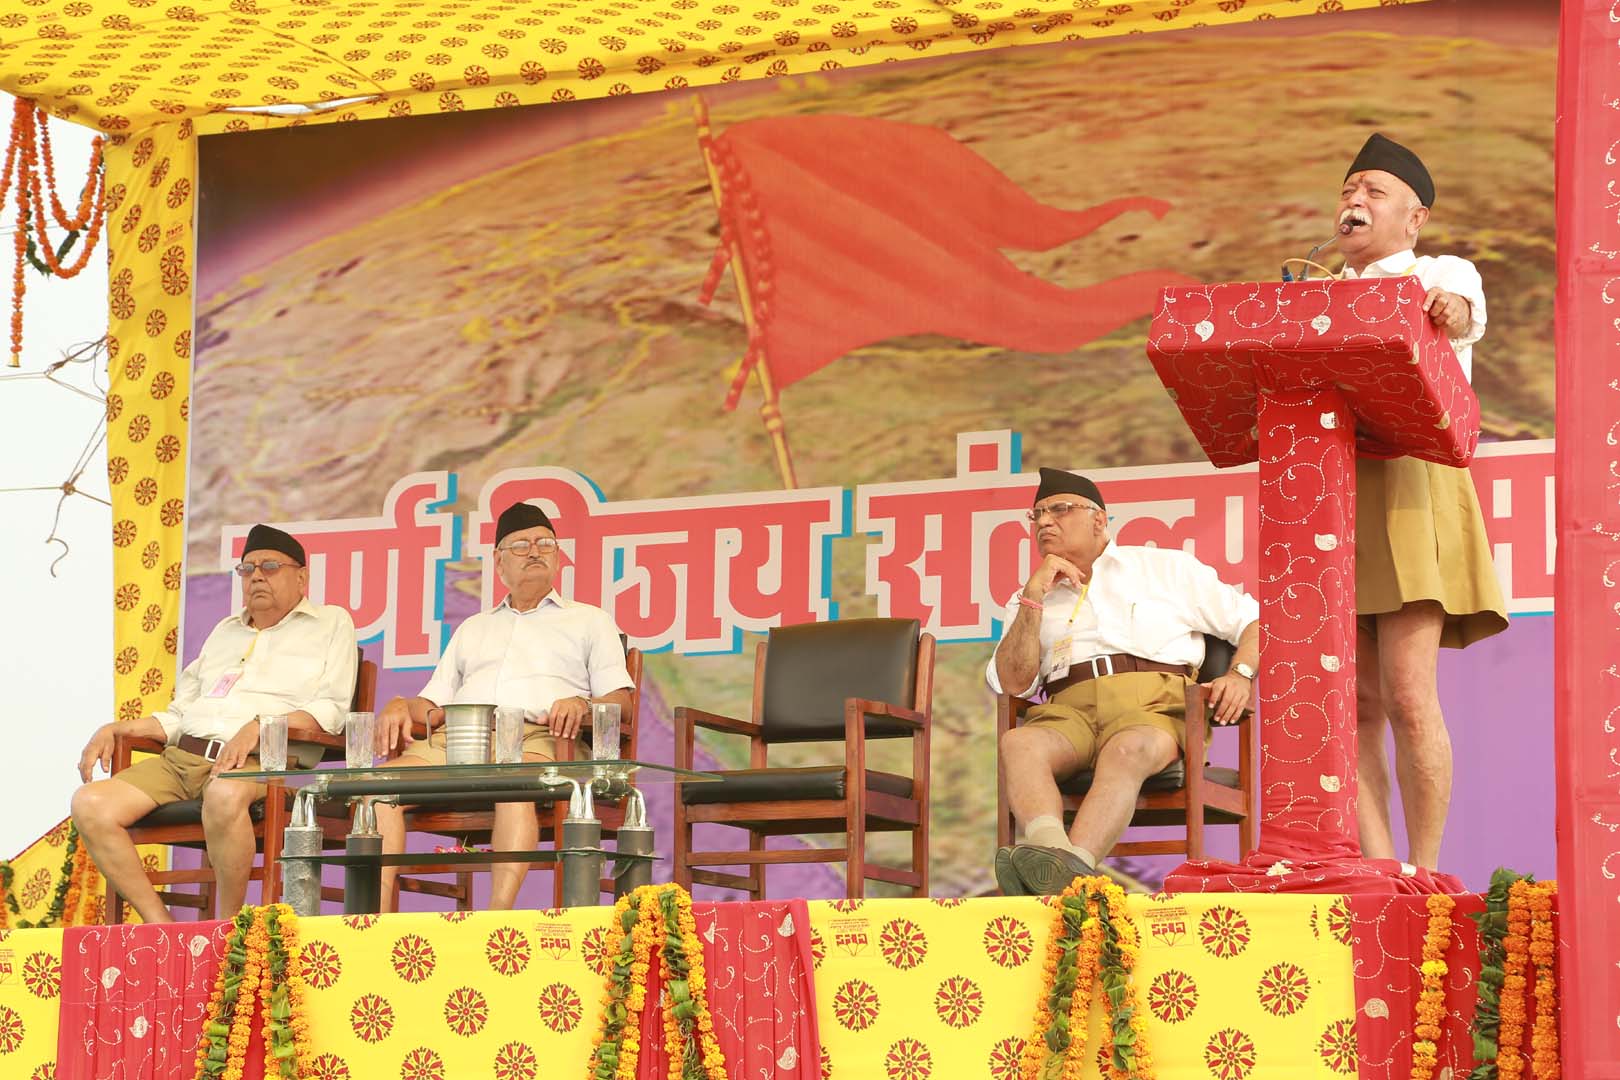 RSS Sarasanghachalak Mohan Bhagwat addressing the valedictory of Yuva Sankalp Shivir at Agra on Monday